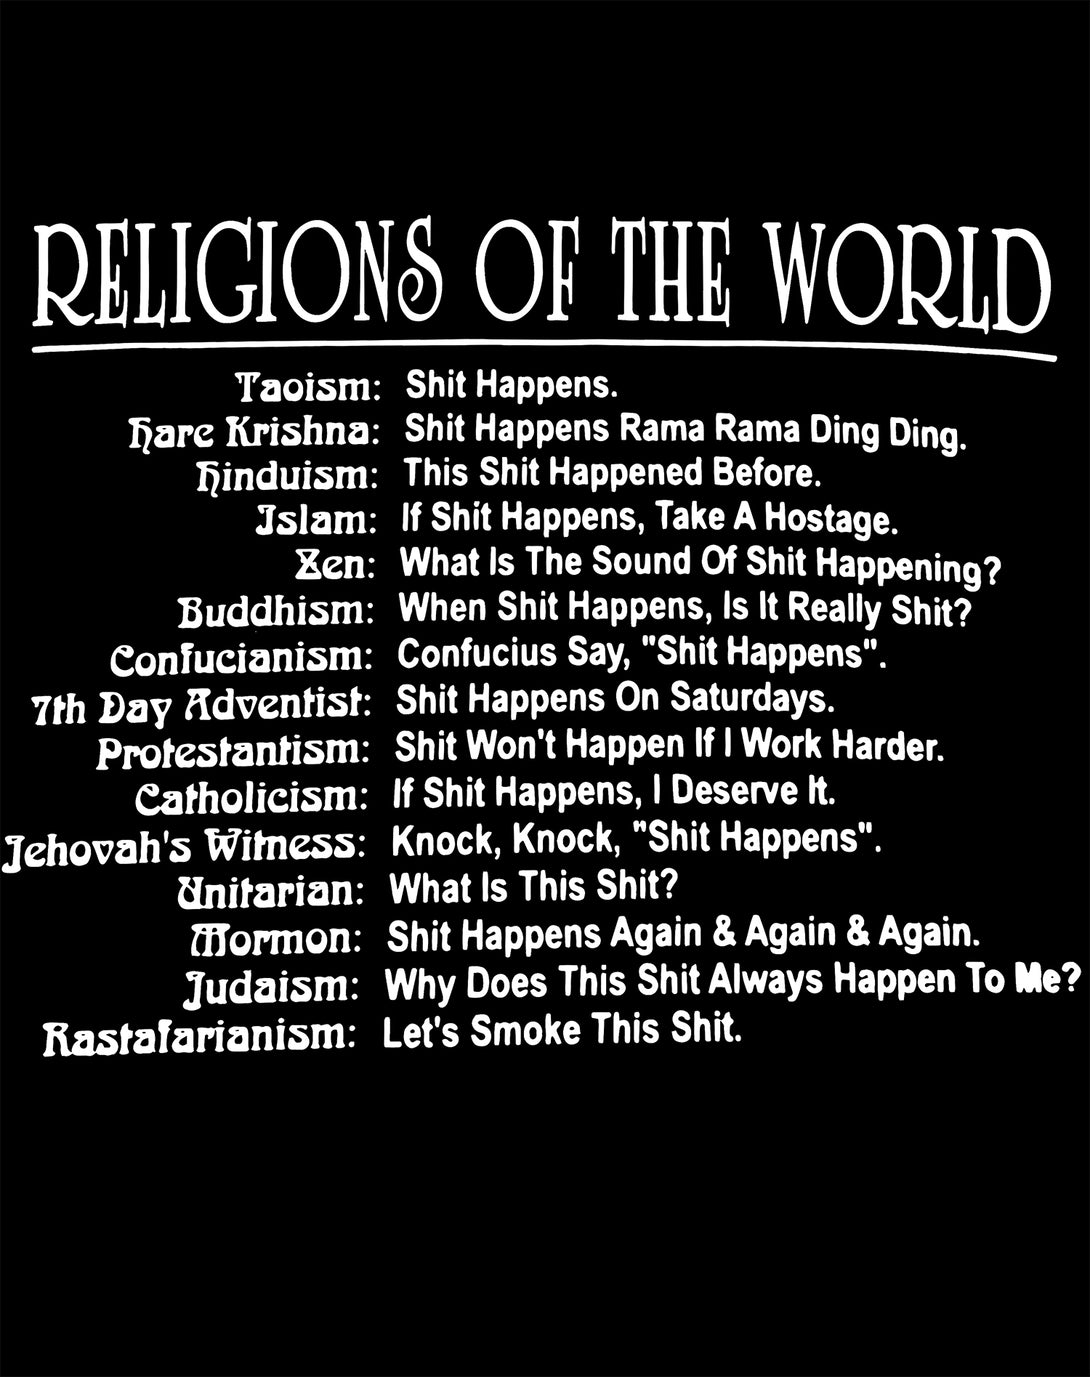 Close Up Urban Attitude Just for Lolz Religions of the World Men's Joke T-shirt (Black)